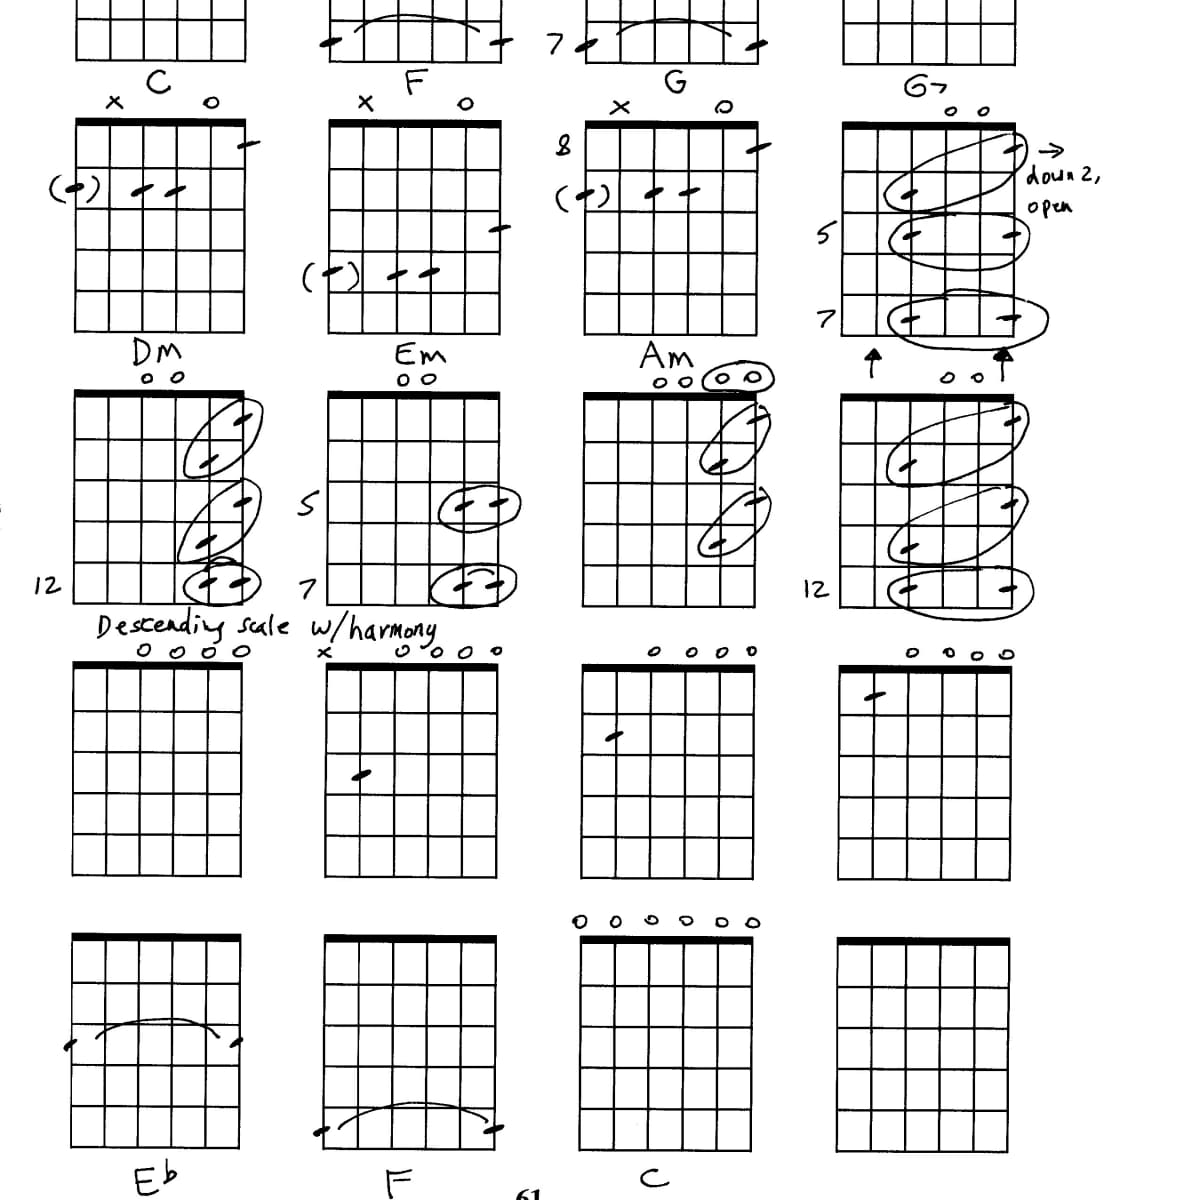 Open c tuning guitar chords 179466-Guitar chords in open c tuning